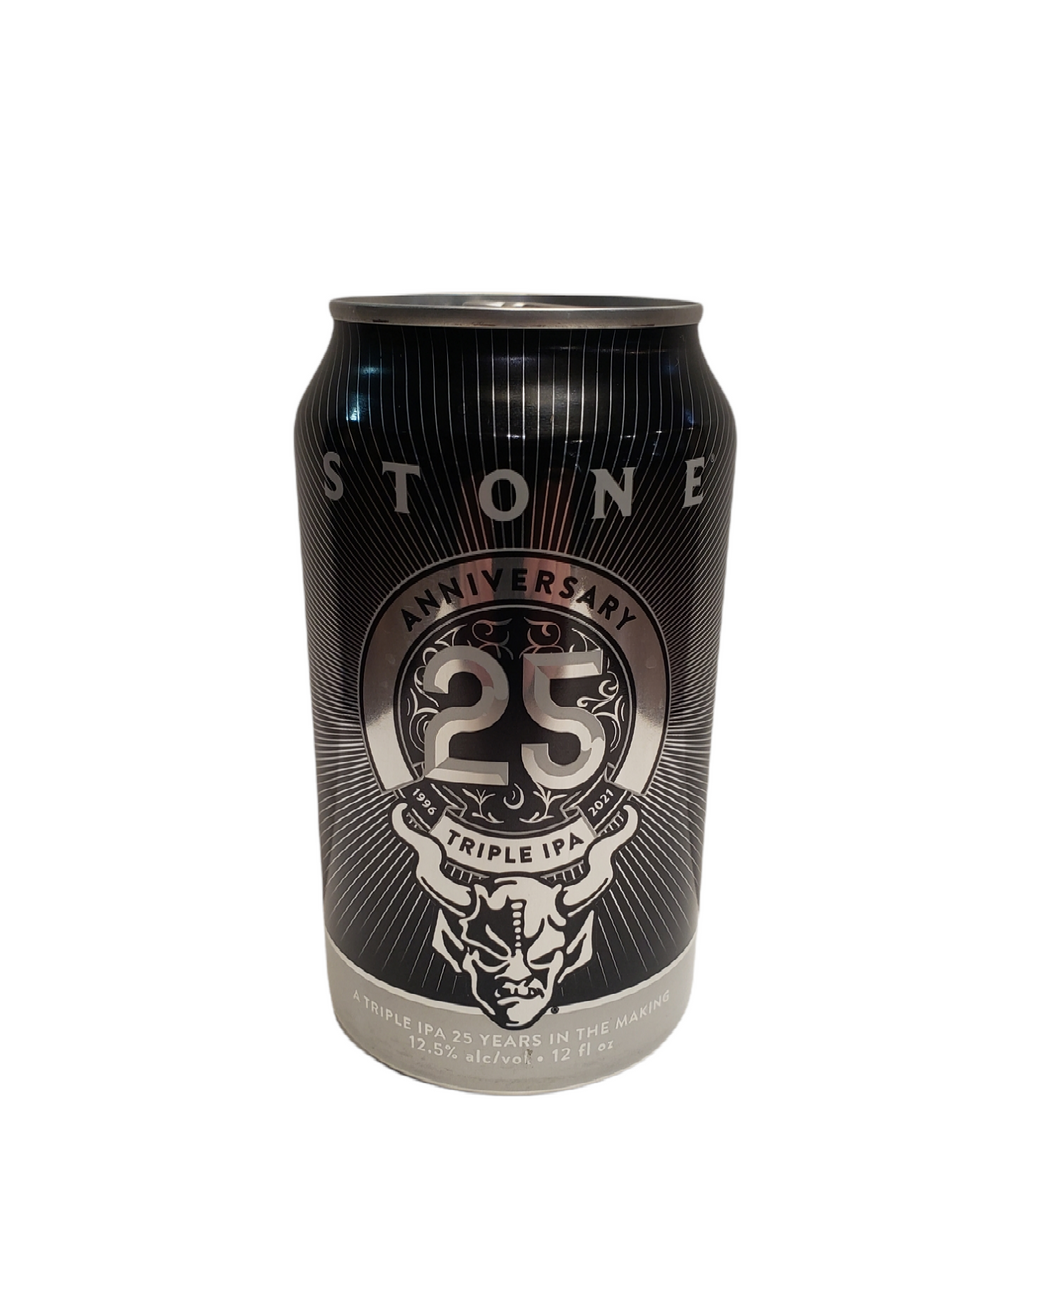 Stone 25th Anniversary Triple IPA